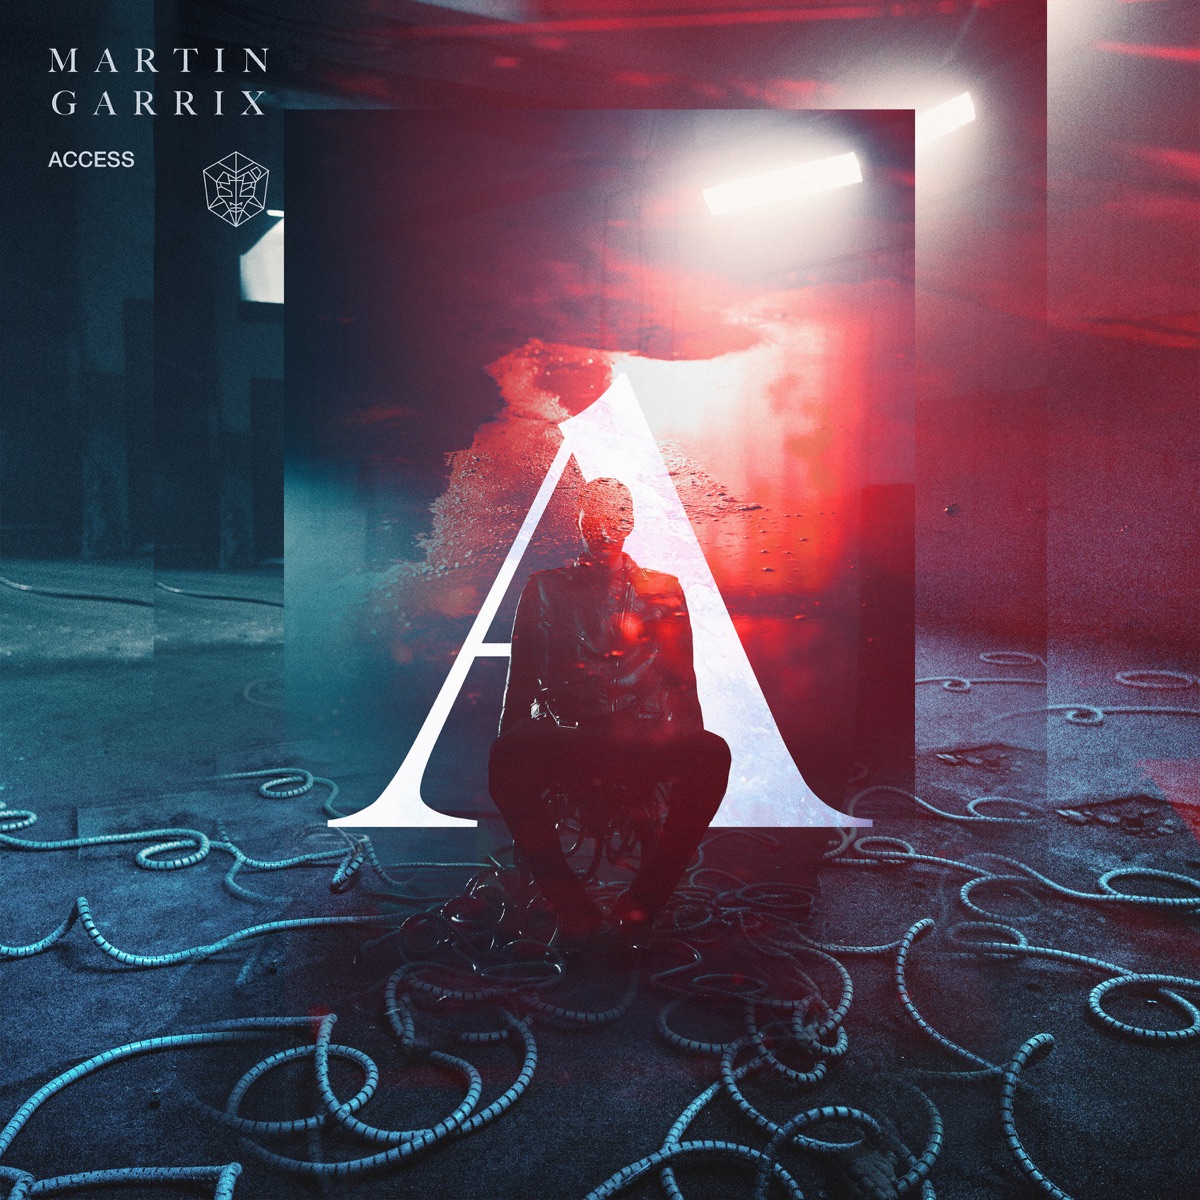 Access - Single by Martin Garrix on Apple Music